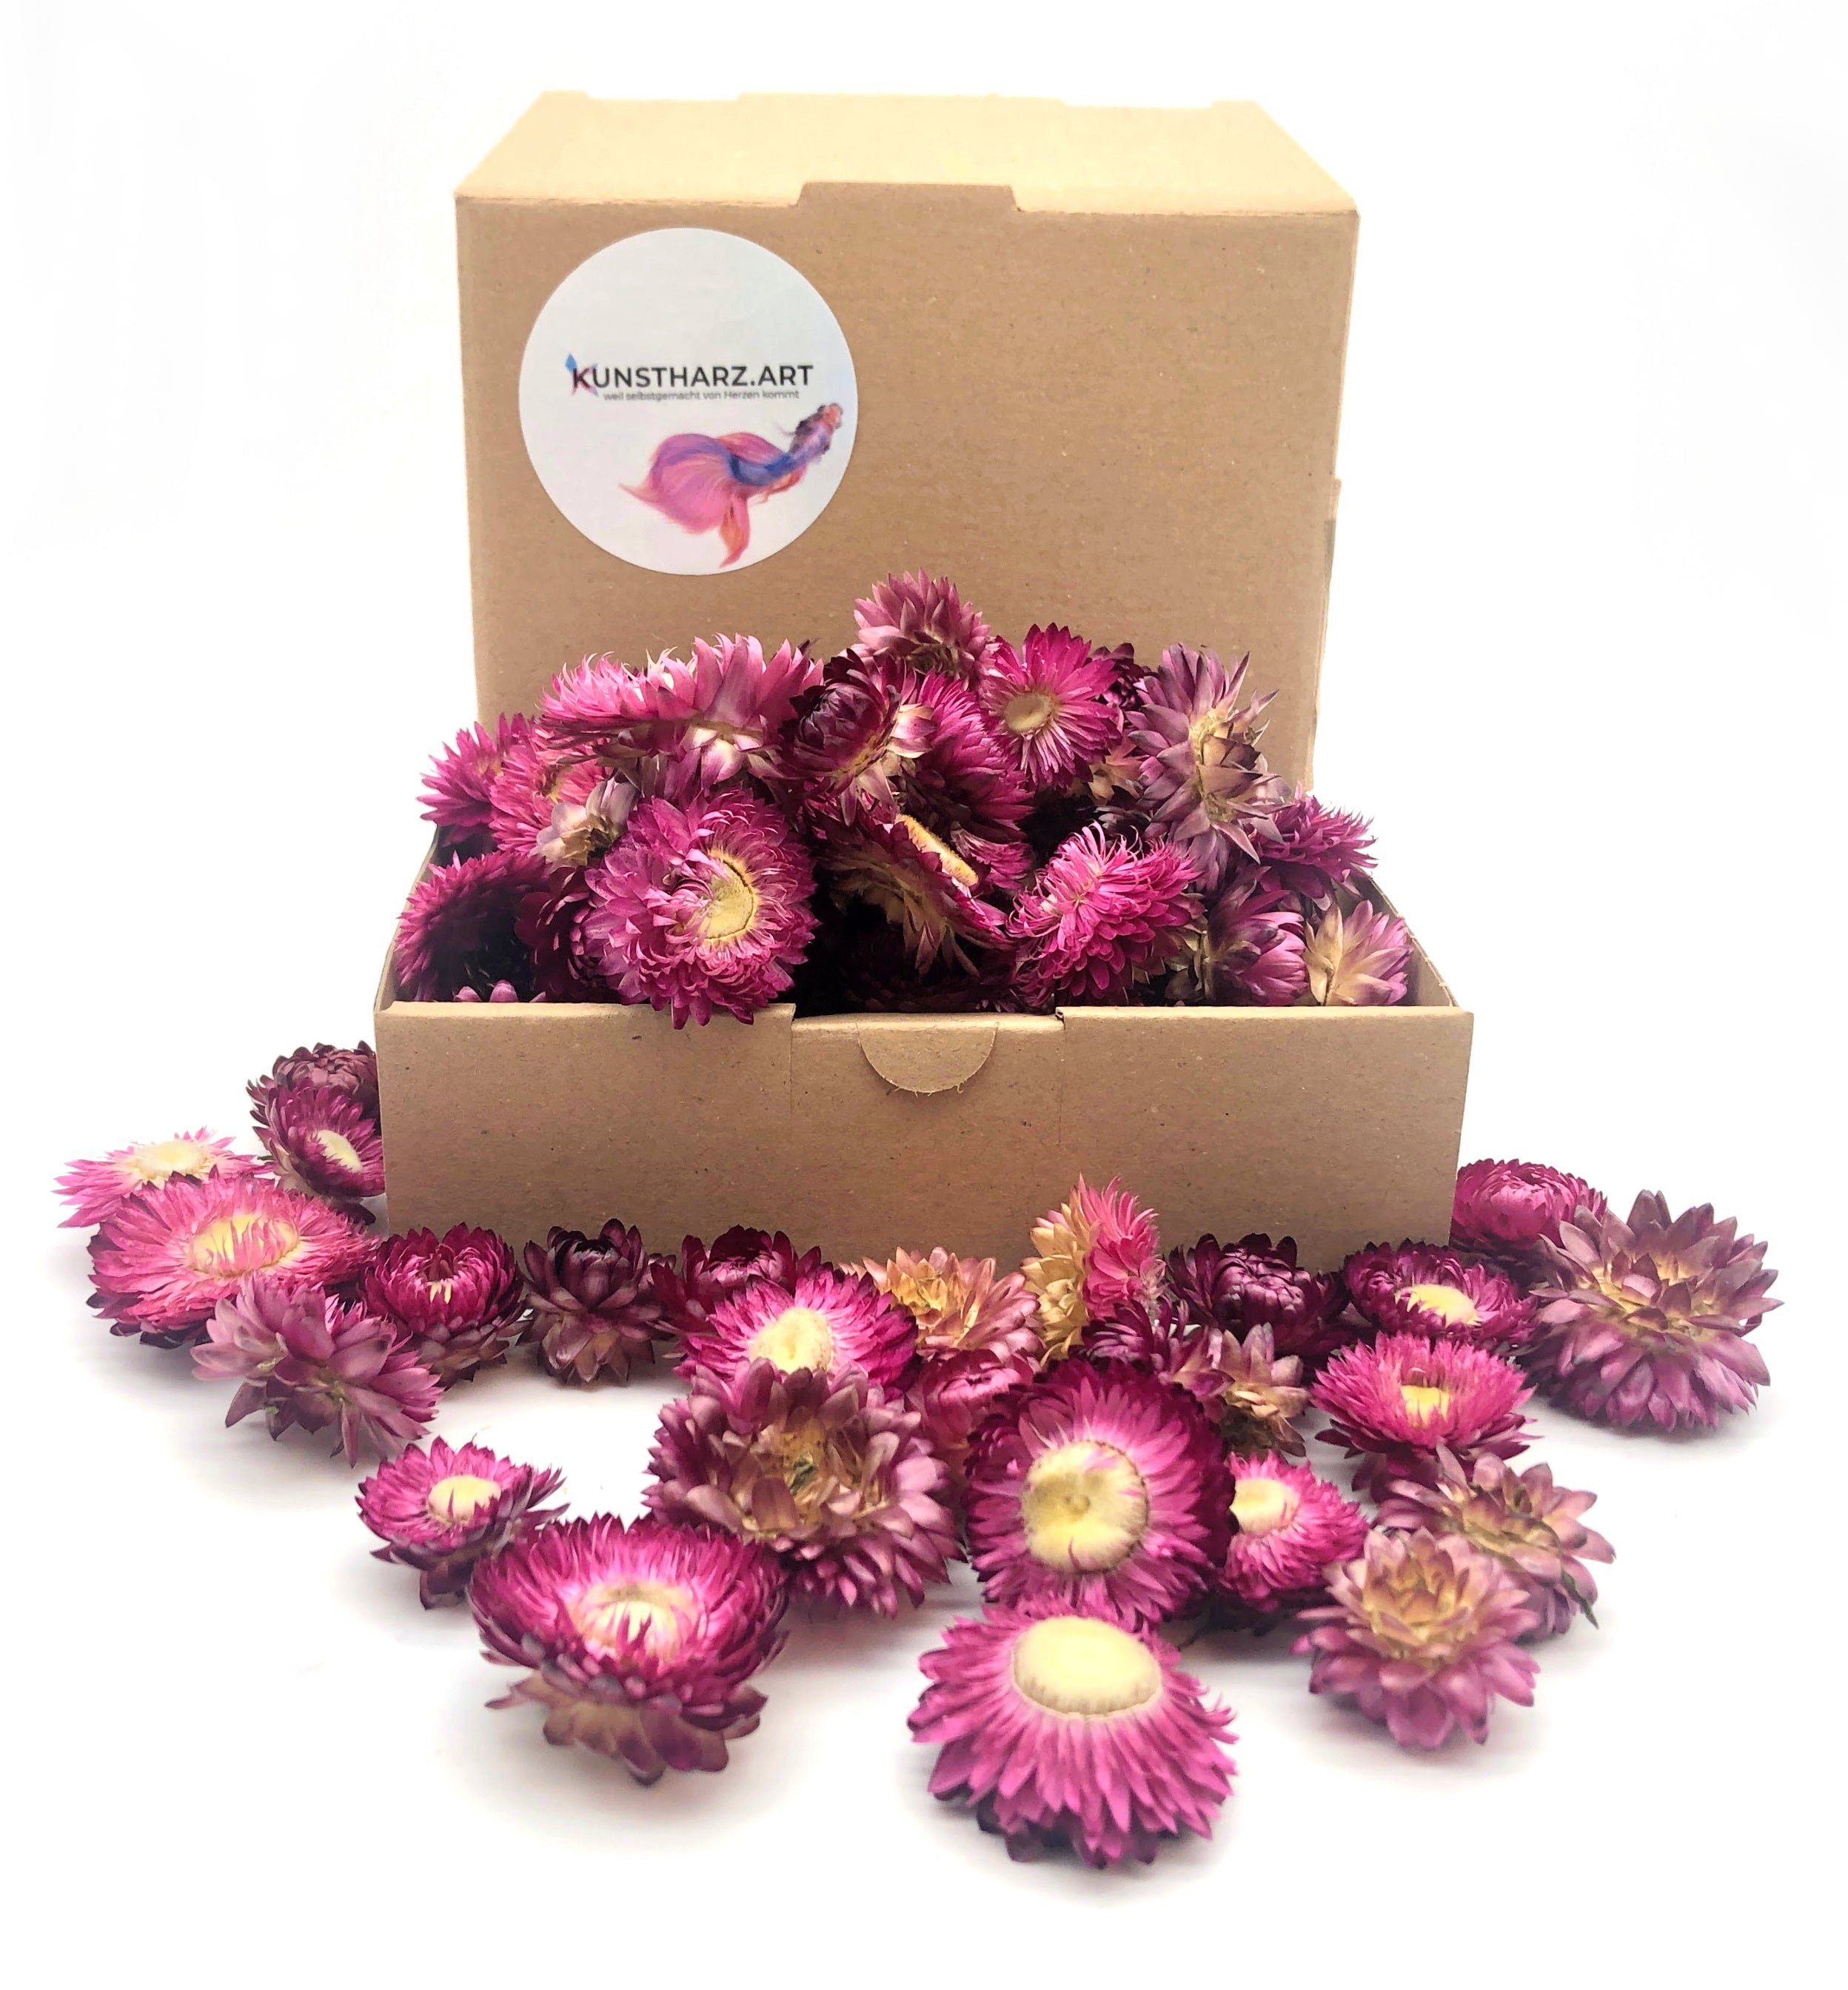 Trockenblume Strohblumenköpfe Helichrysum getrocknet: gemischt oder farblich sortiert - Lila, Kunstharz.Art